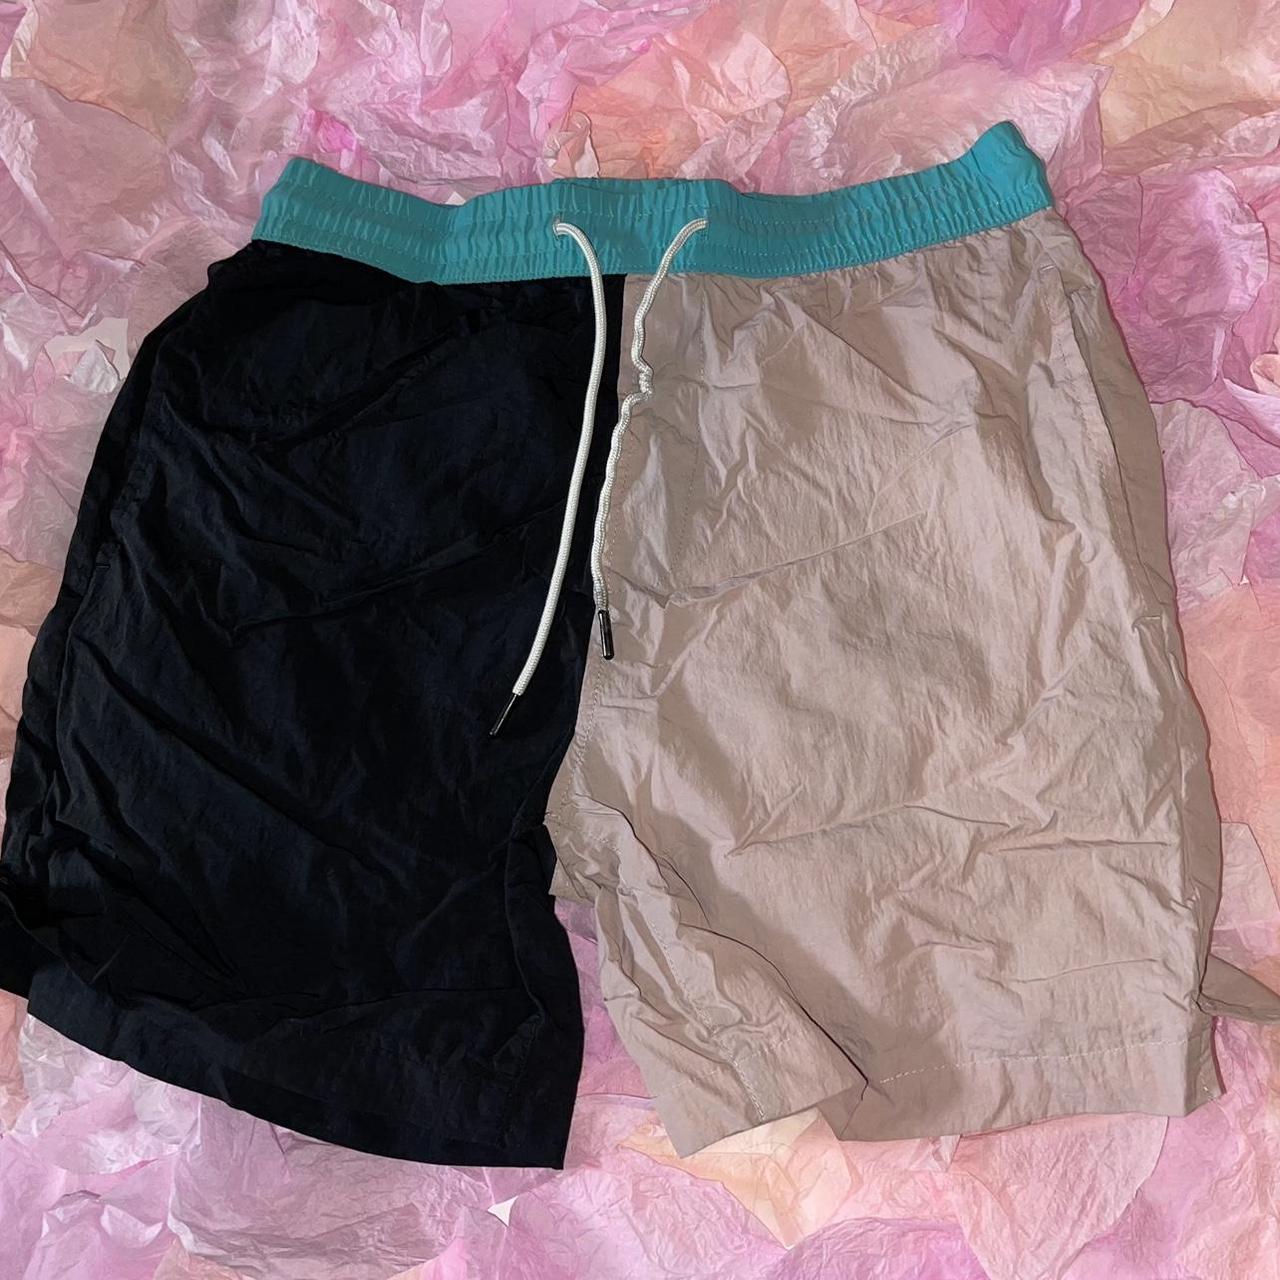 Original Use Men's Pink and Black Swim-briefs-shorts | Depop